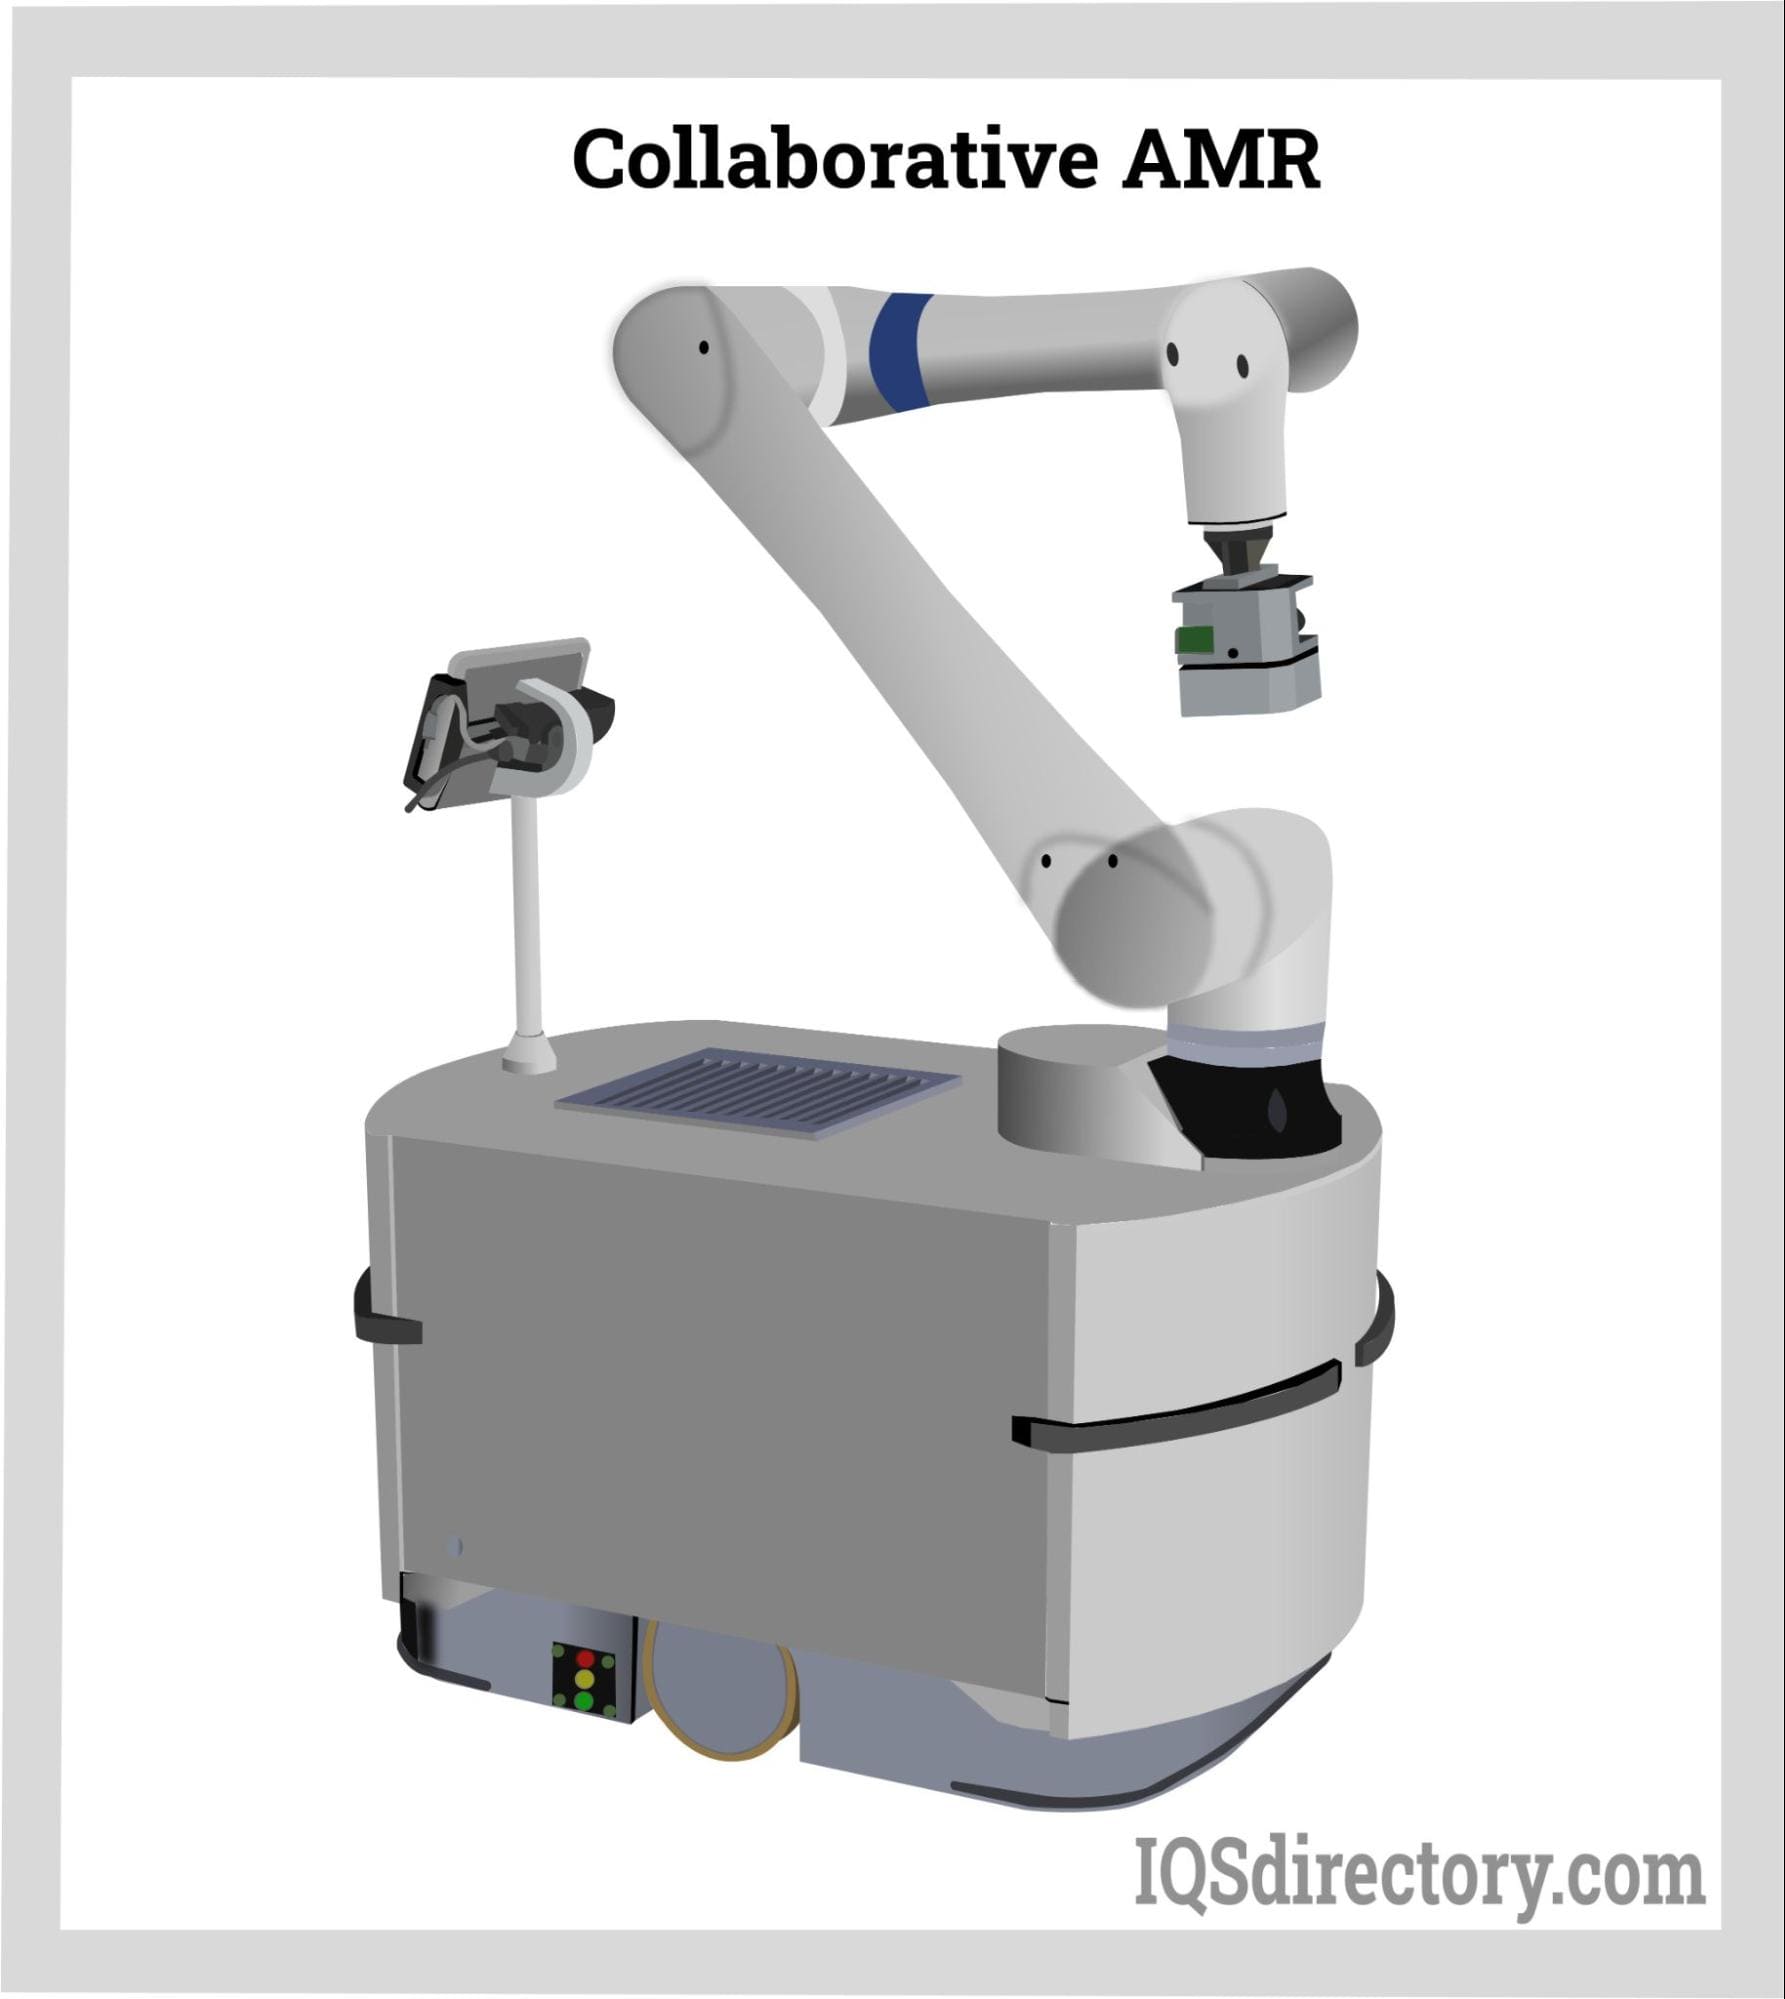 Collaborative AMR